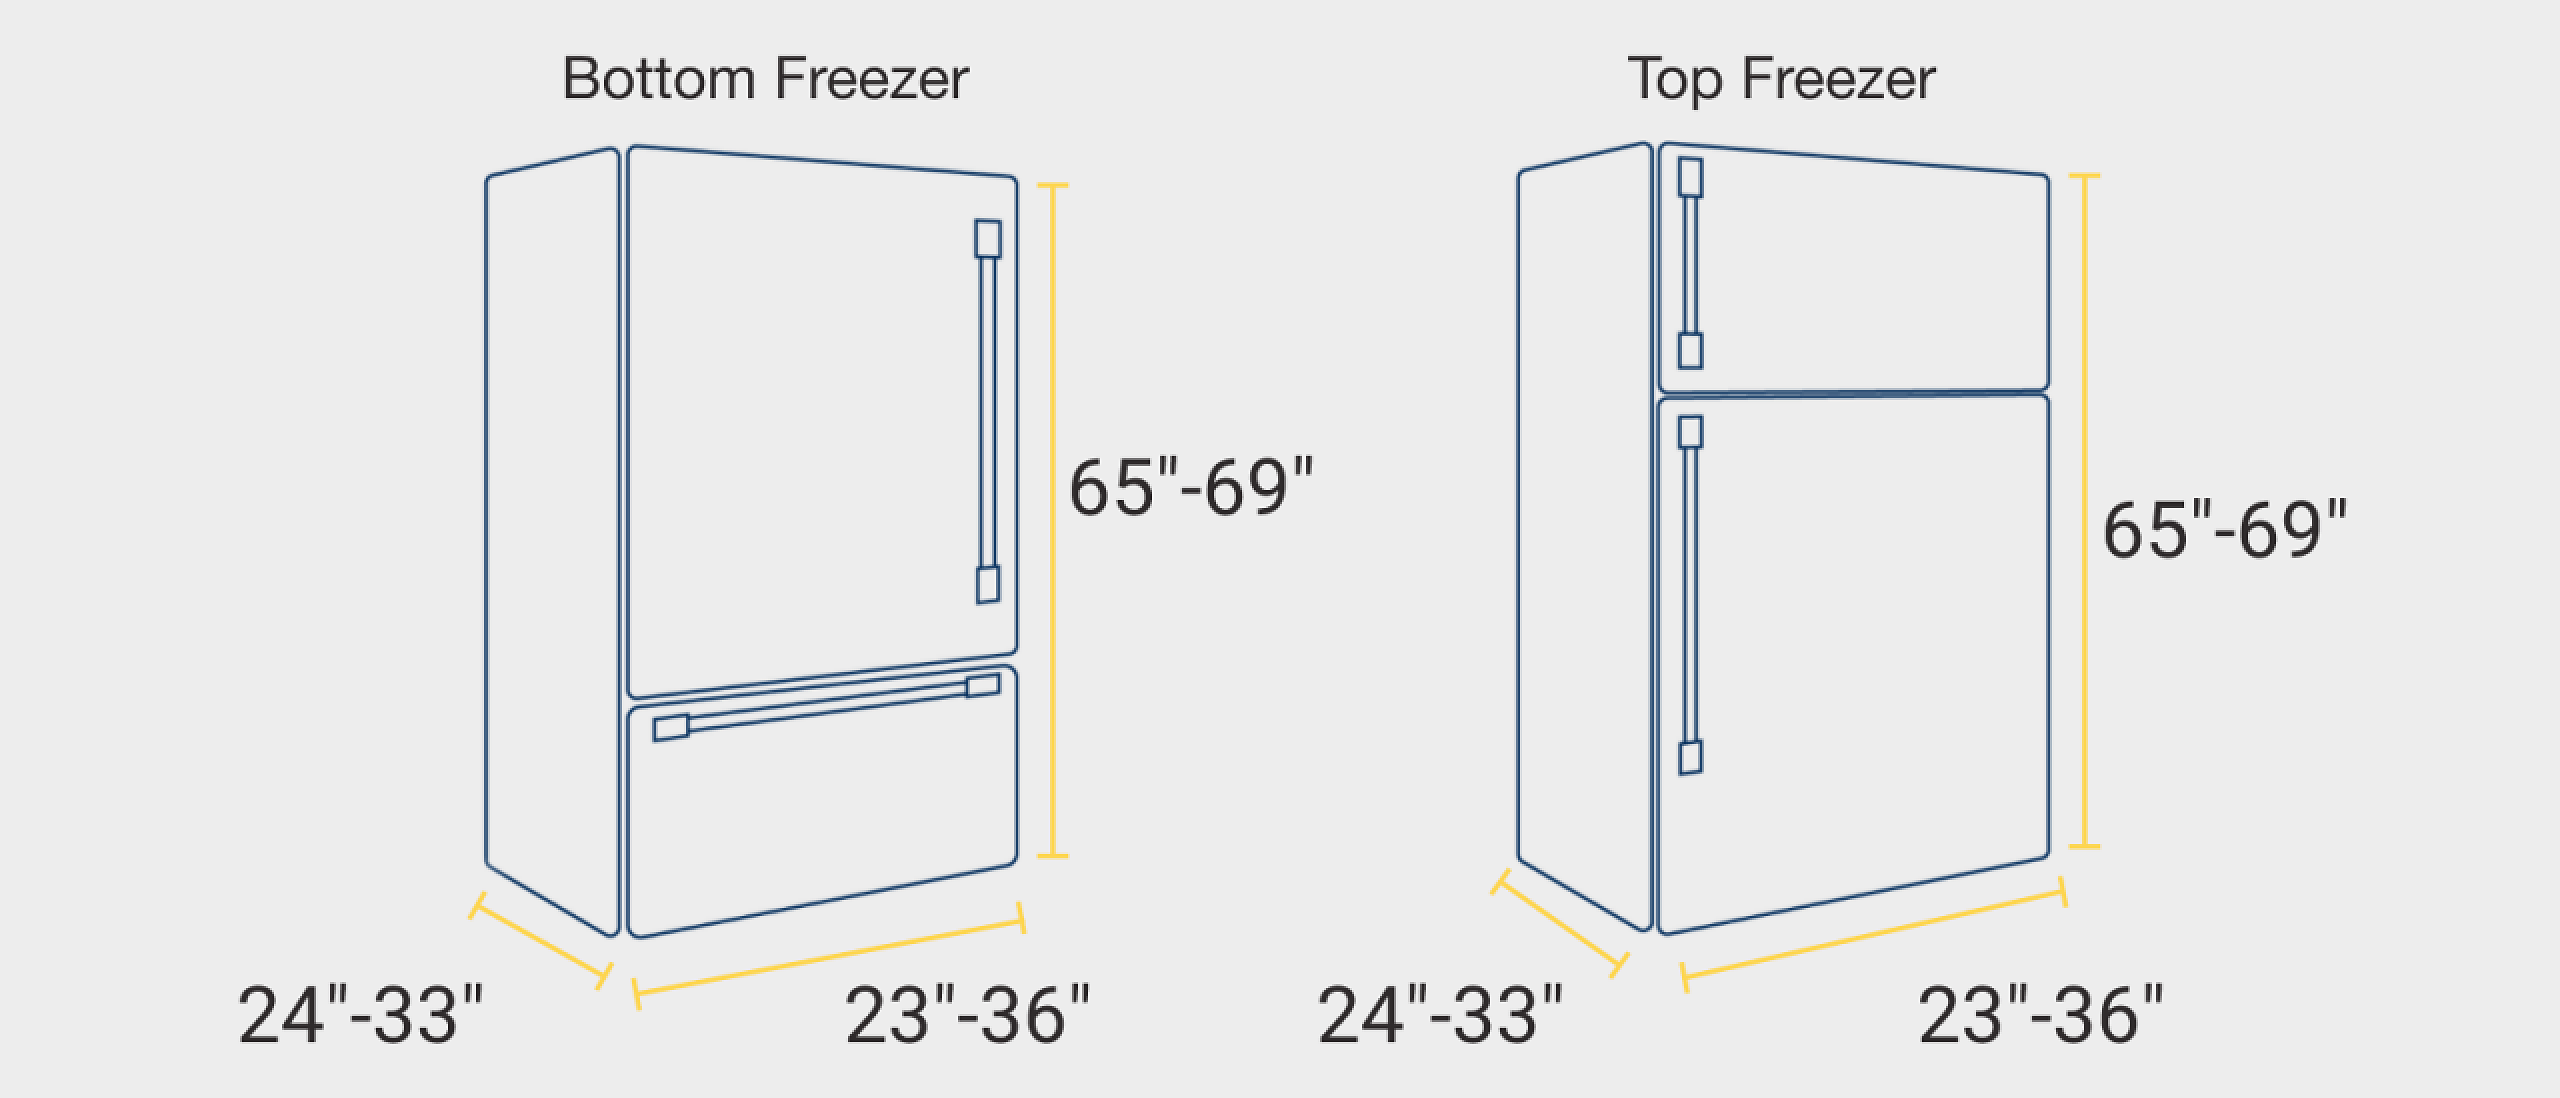 Bottom freezer and top freezer refrigerator measurements